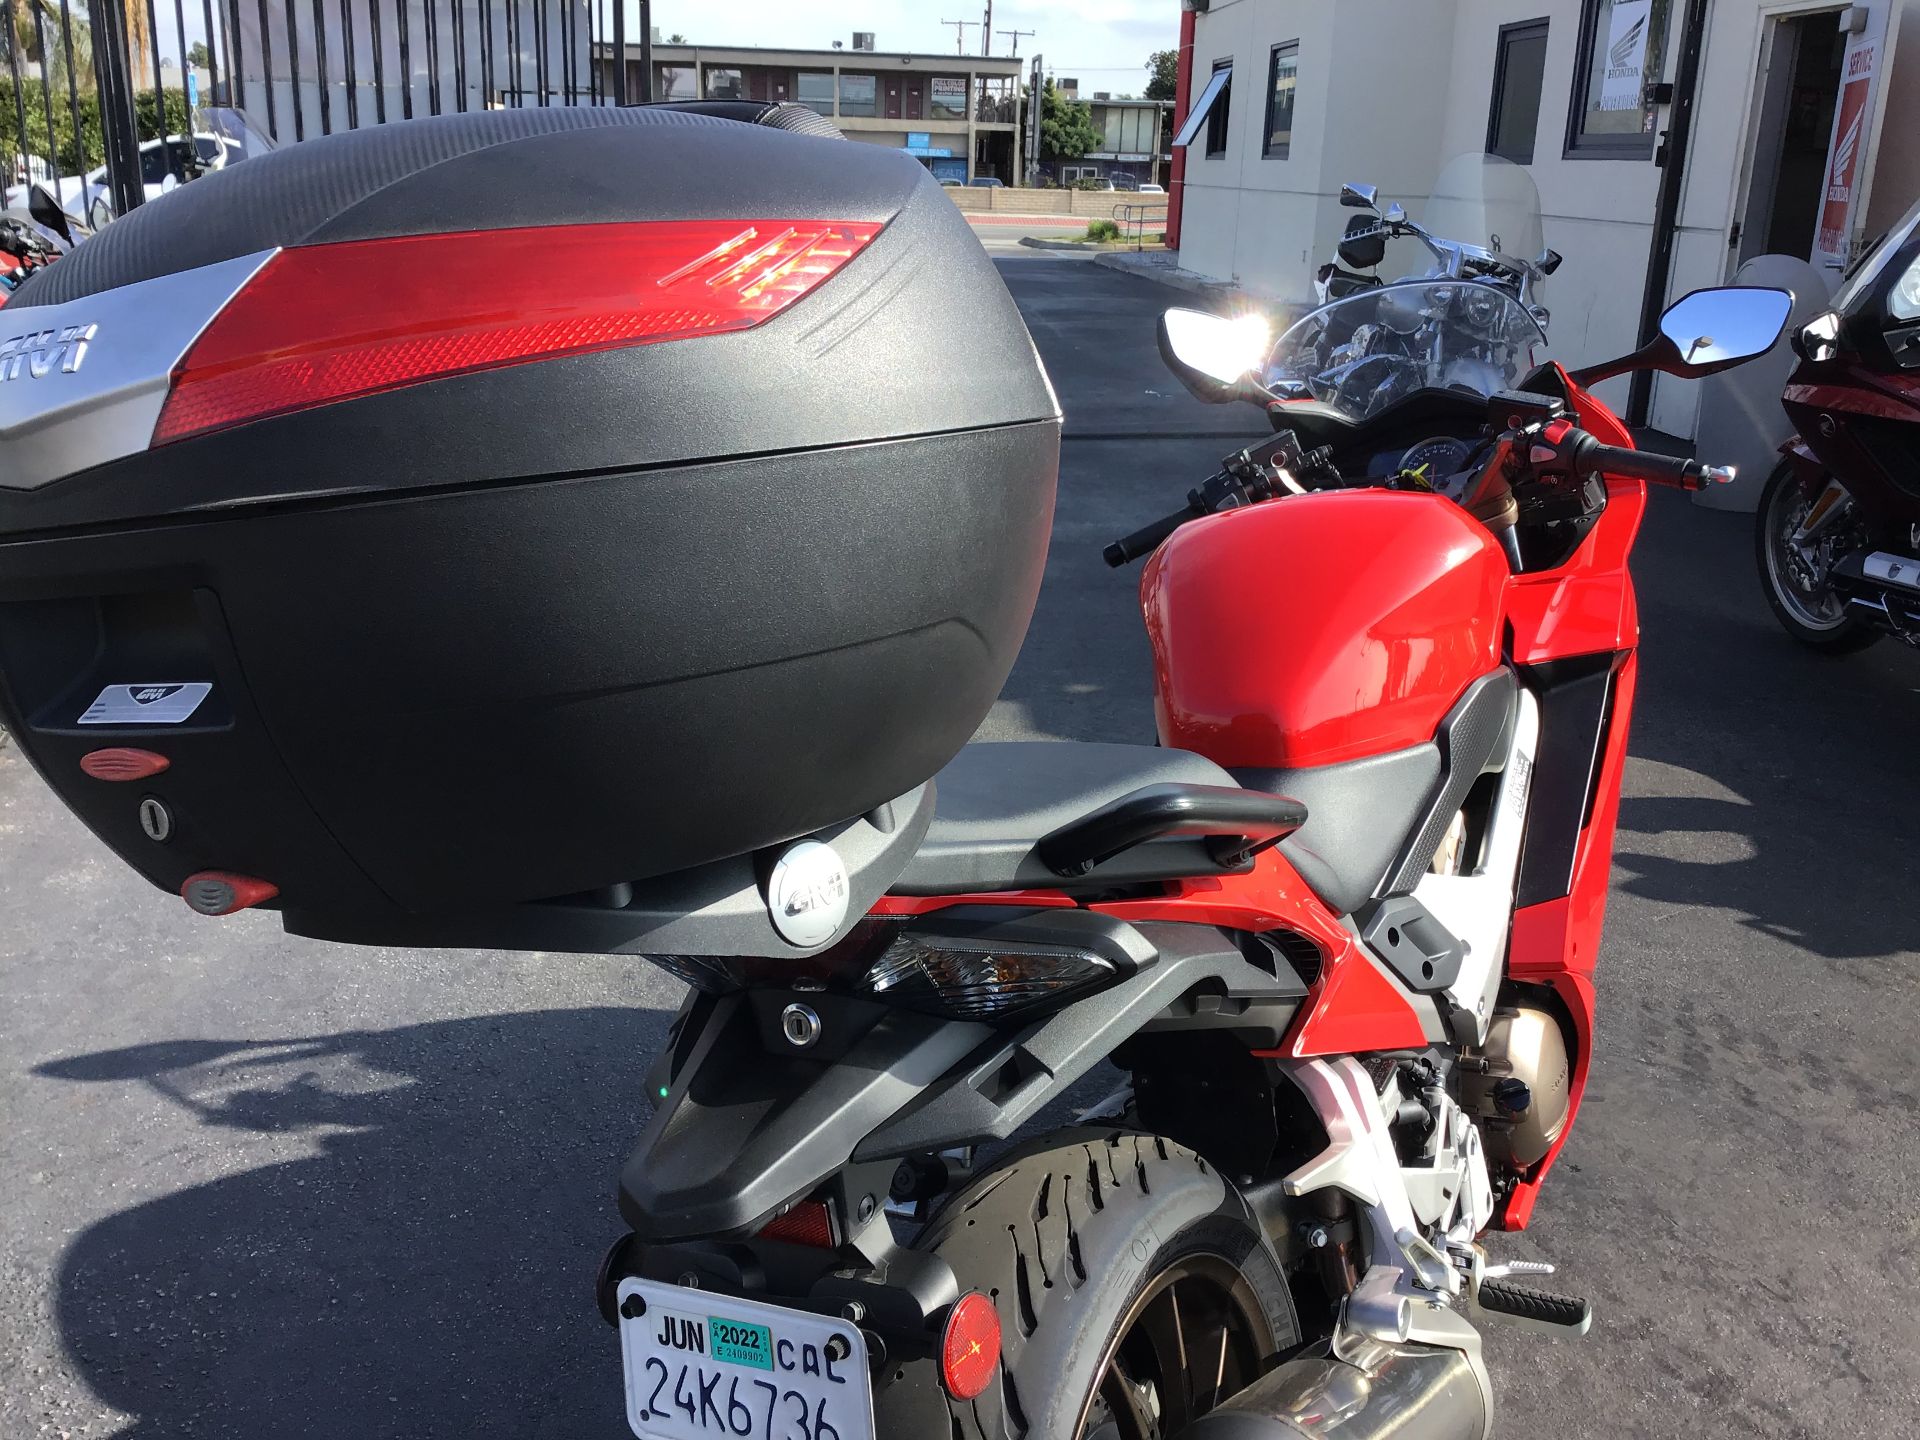 2015 Honda Interceptor® Deluxe in Huntington Beach, California - Photo 5